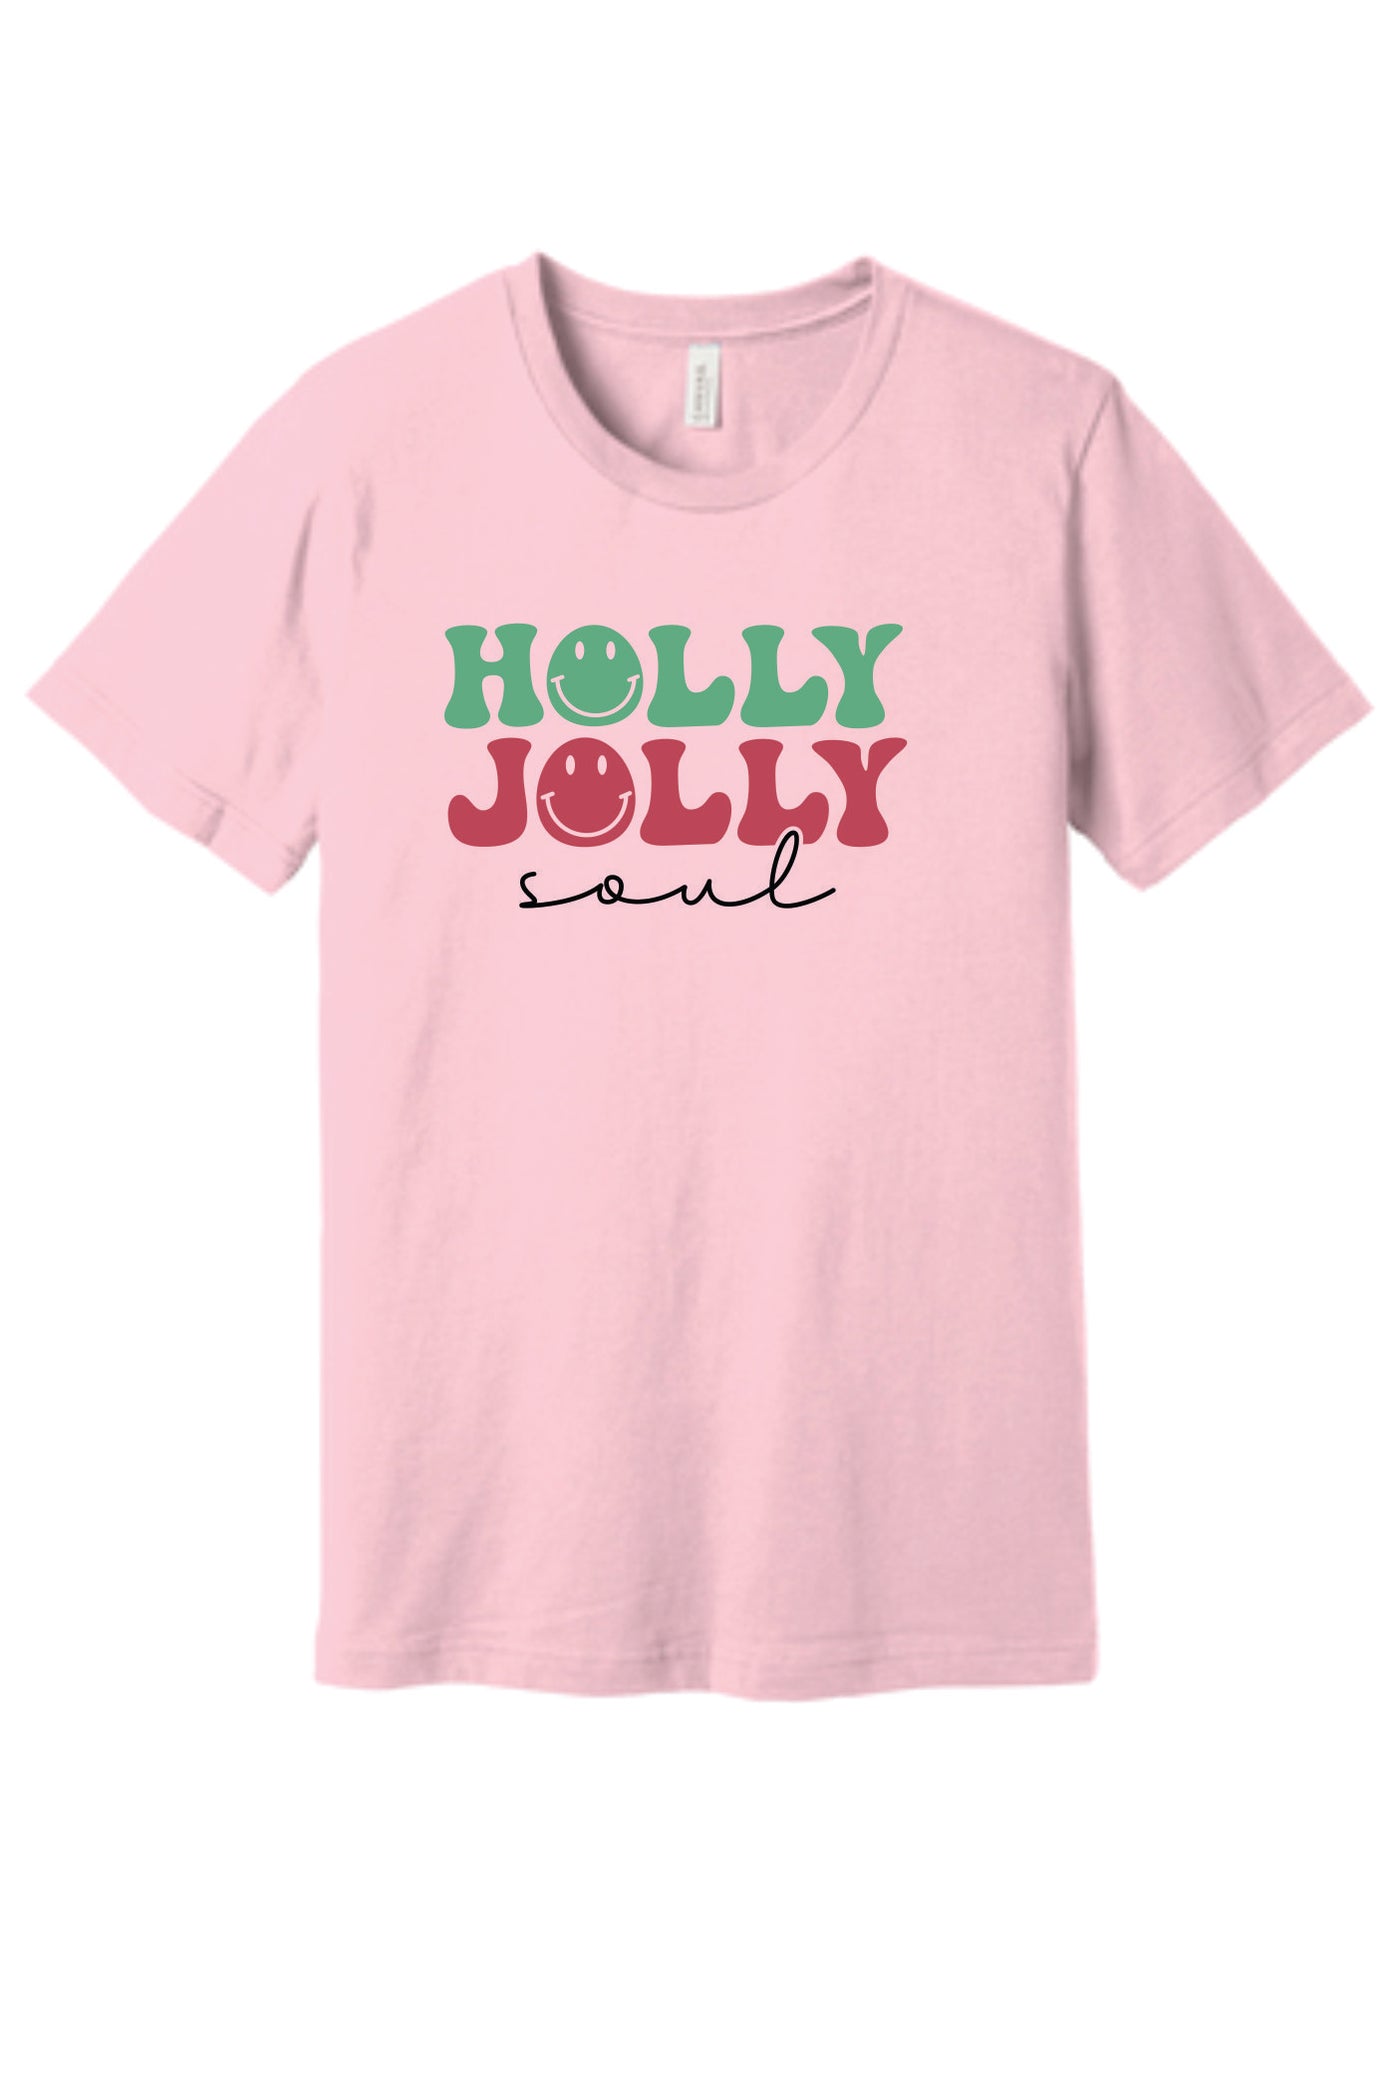 Holly Jolly Soul Short Sleeve T-shirt or Crewneck Sweatshirt